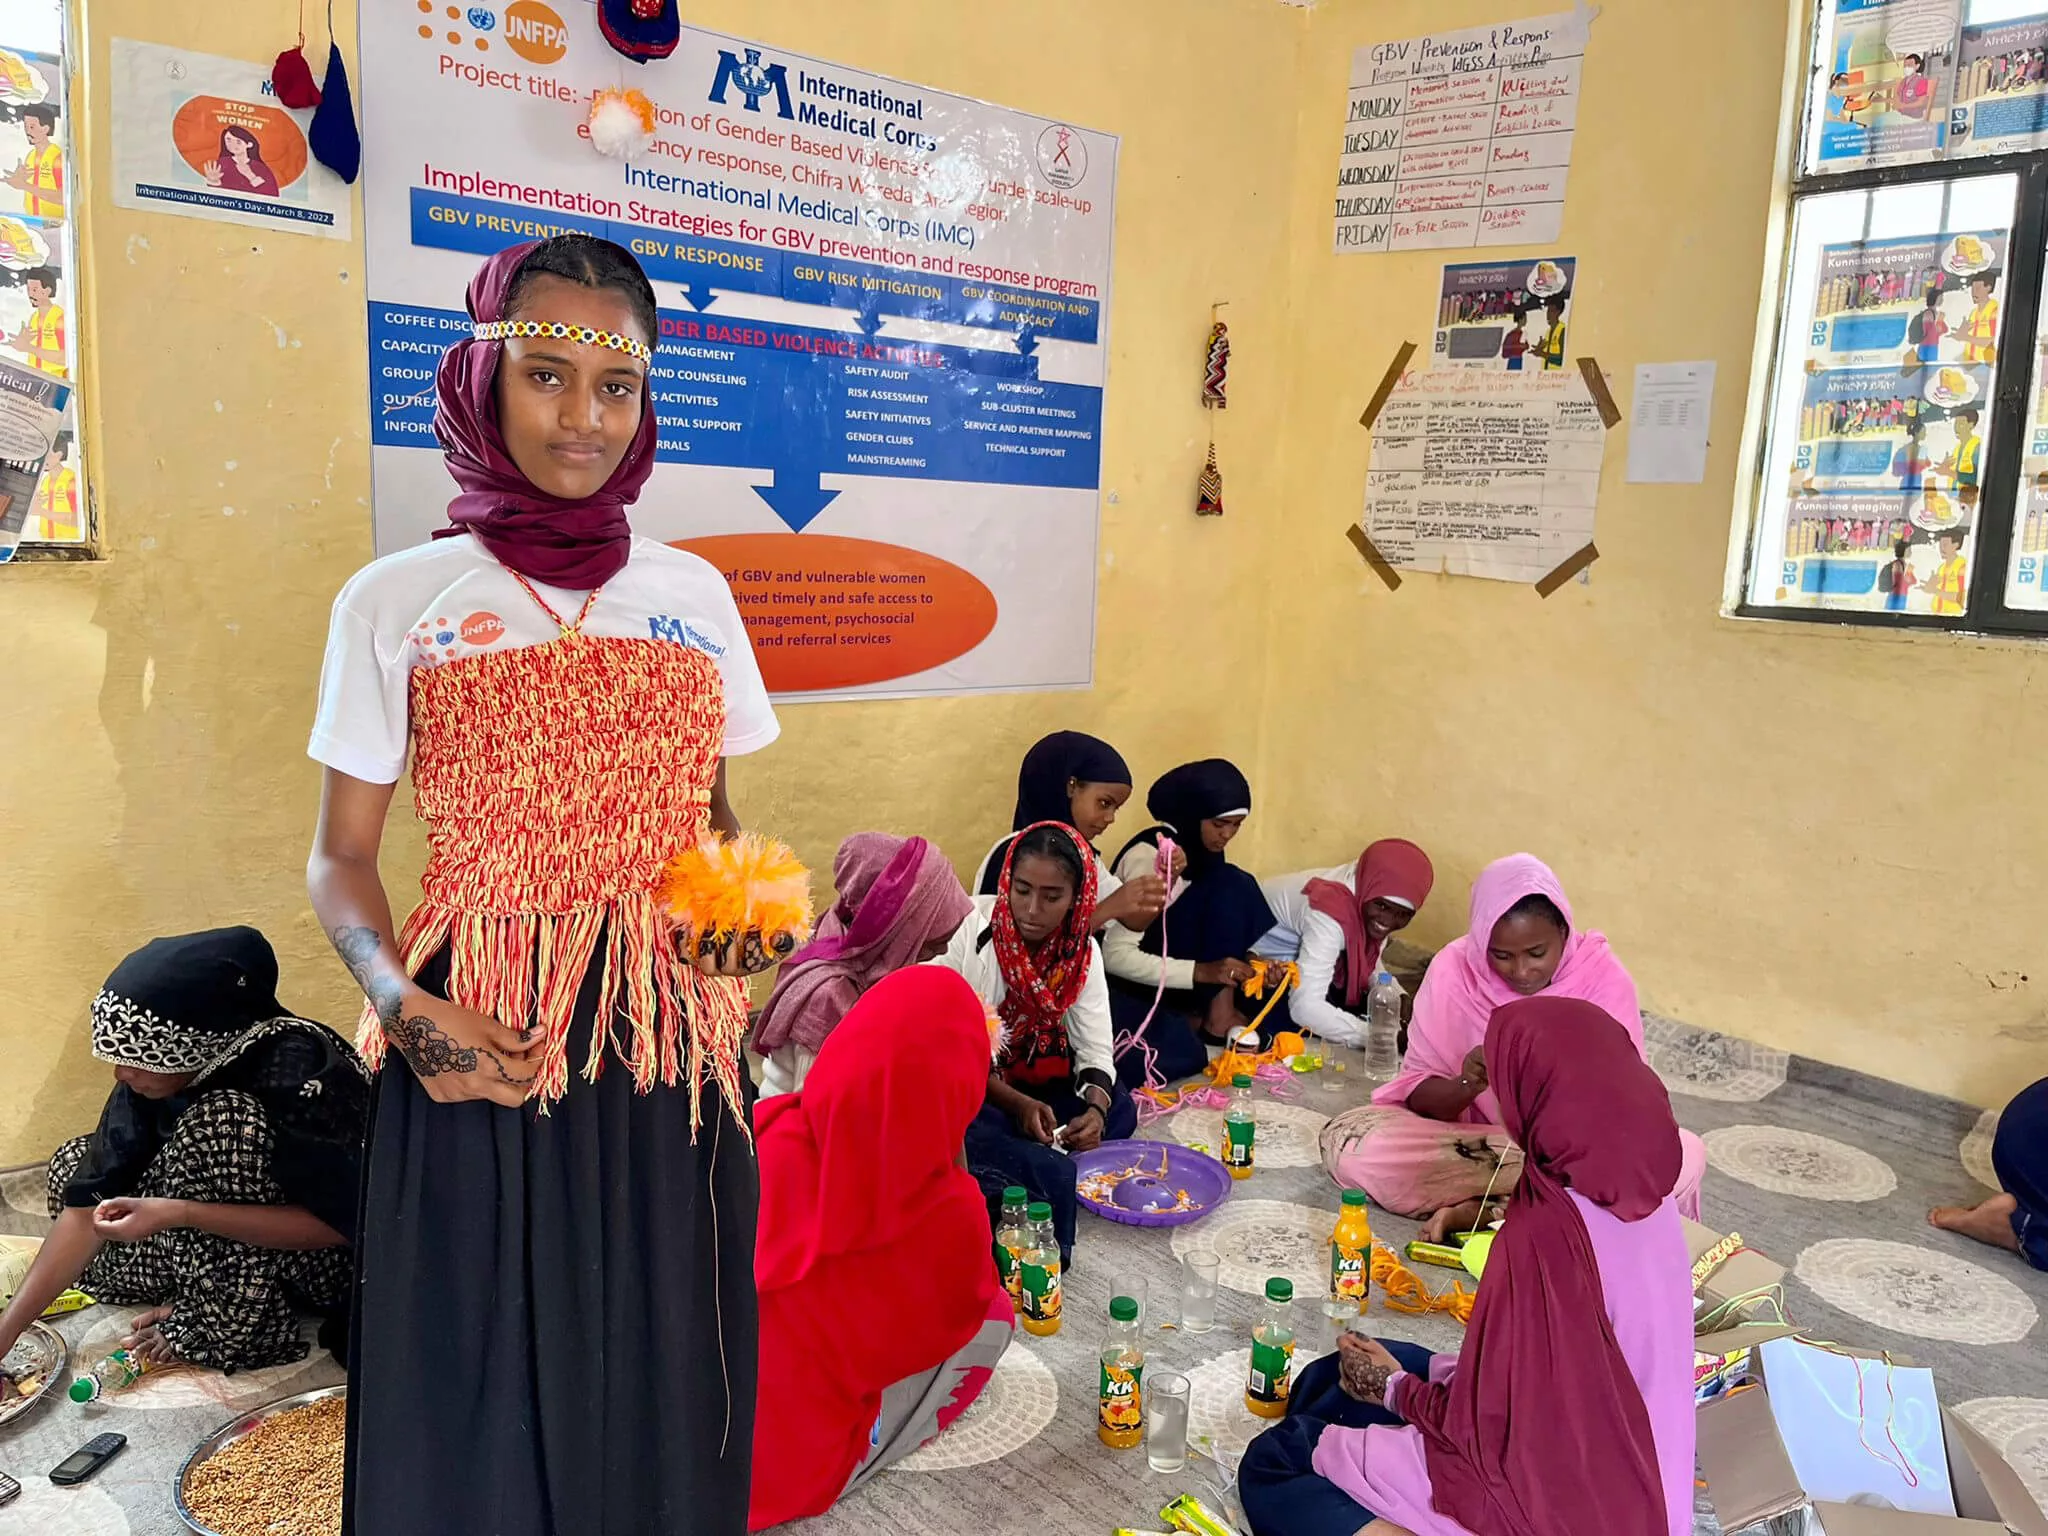 Zahara Ali displays handicrafts she made during WGSS sessions in Chifra woreda, Afar region, Ethiopia.